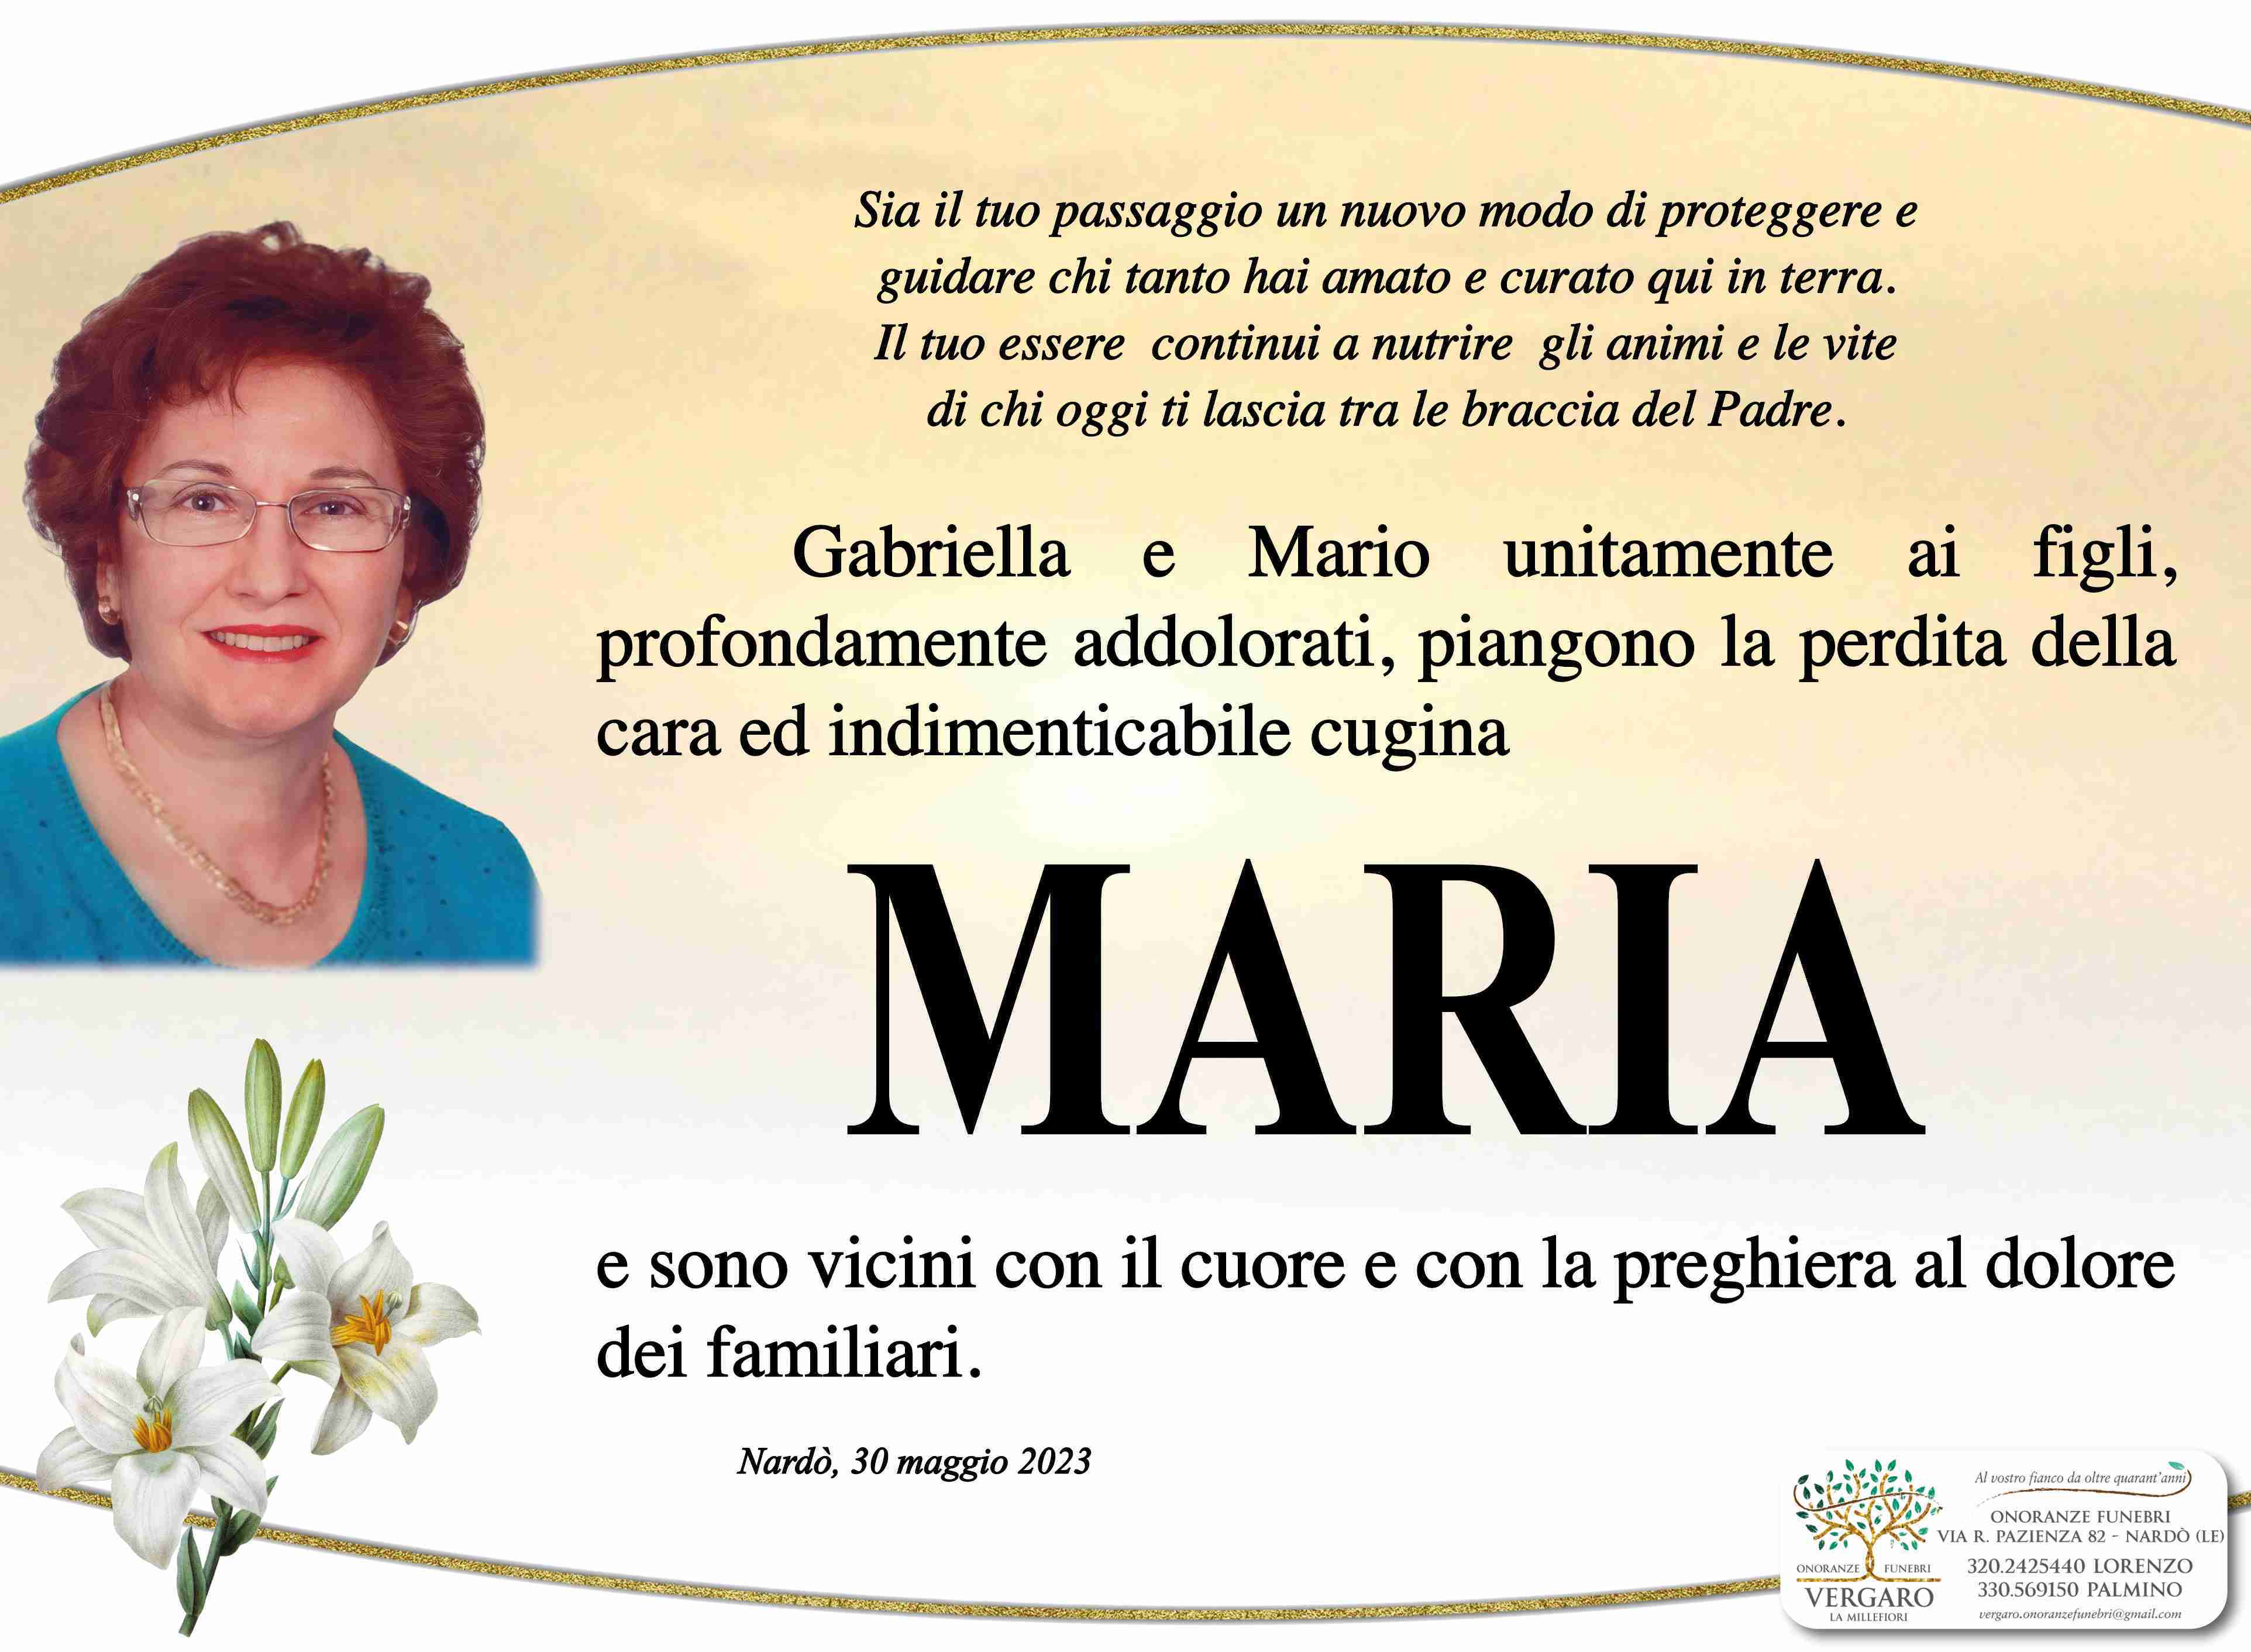 Maria Grazia Perrona